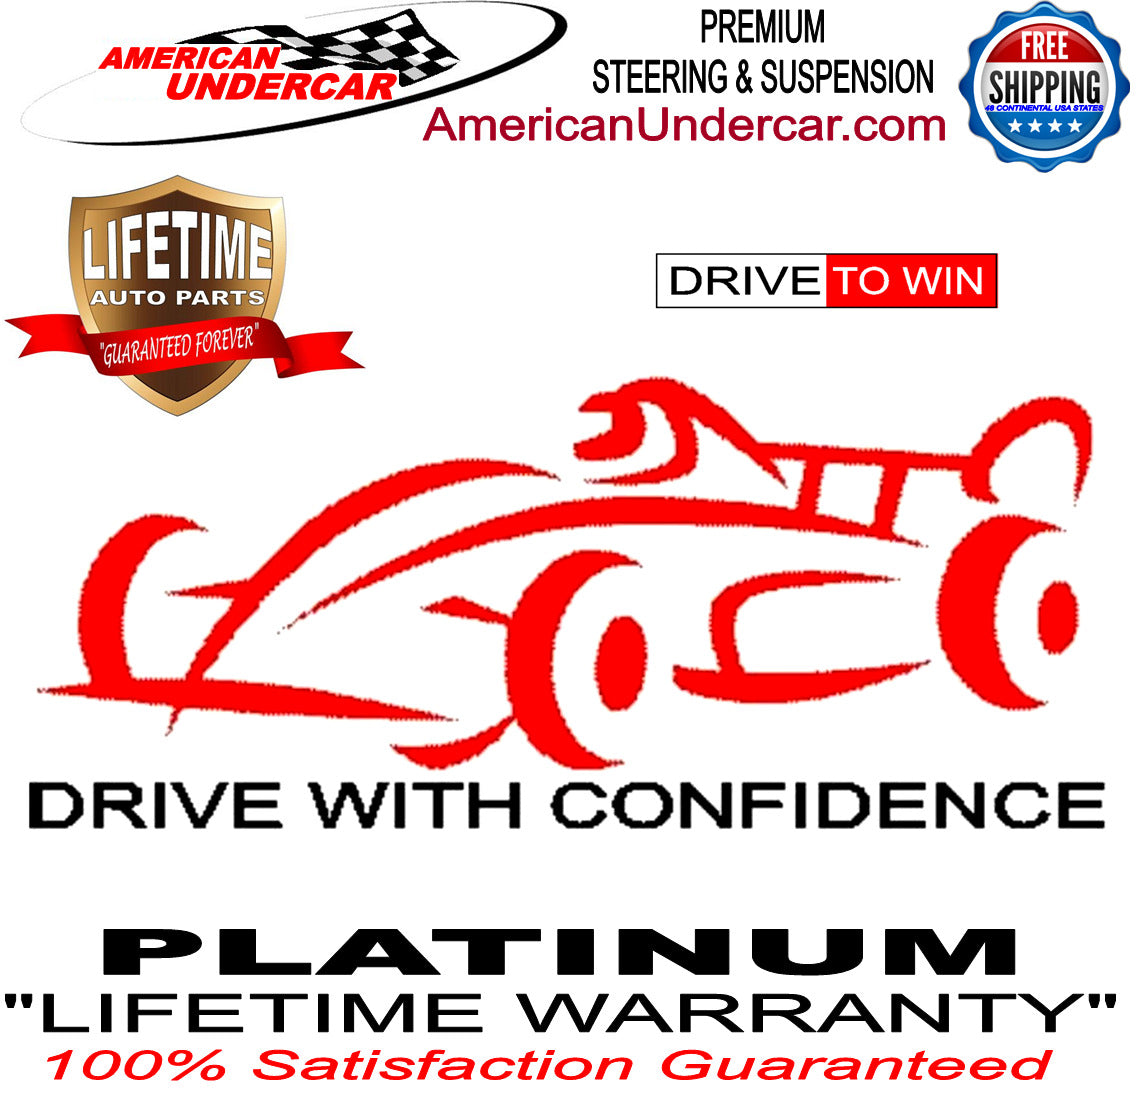 Lifetime Drag Link Tie Rod Sleeve Steering Suspension Kit for 2007-2014 Ford E150 2WD